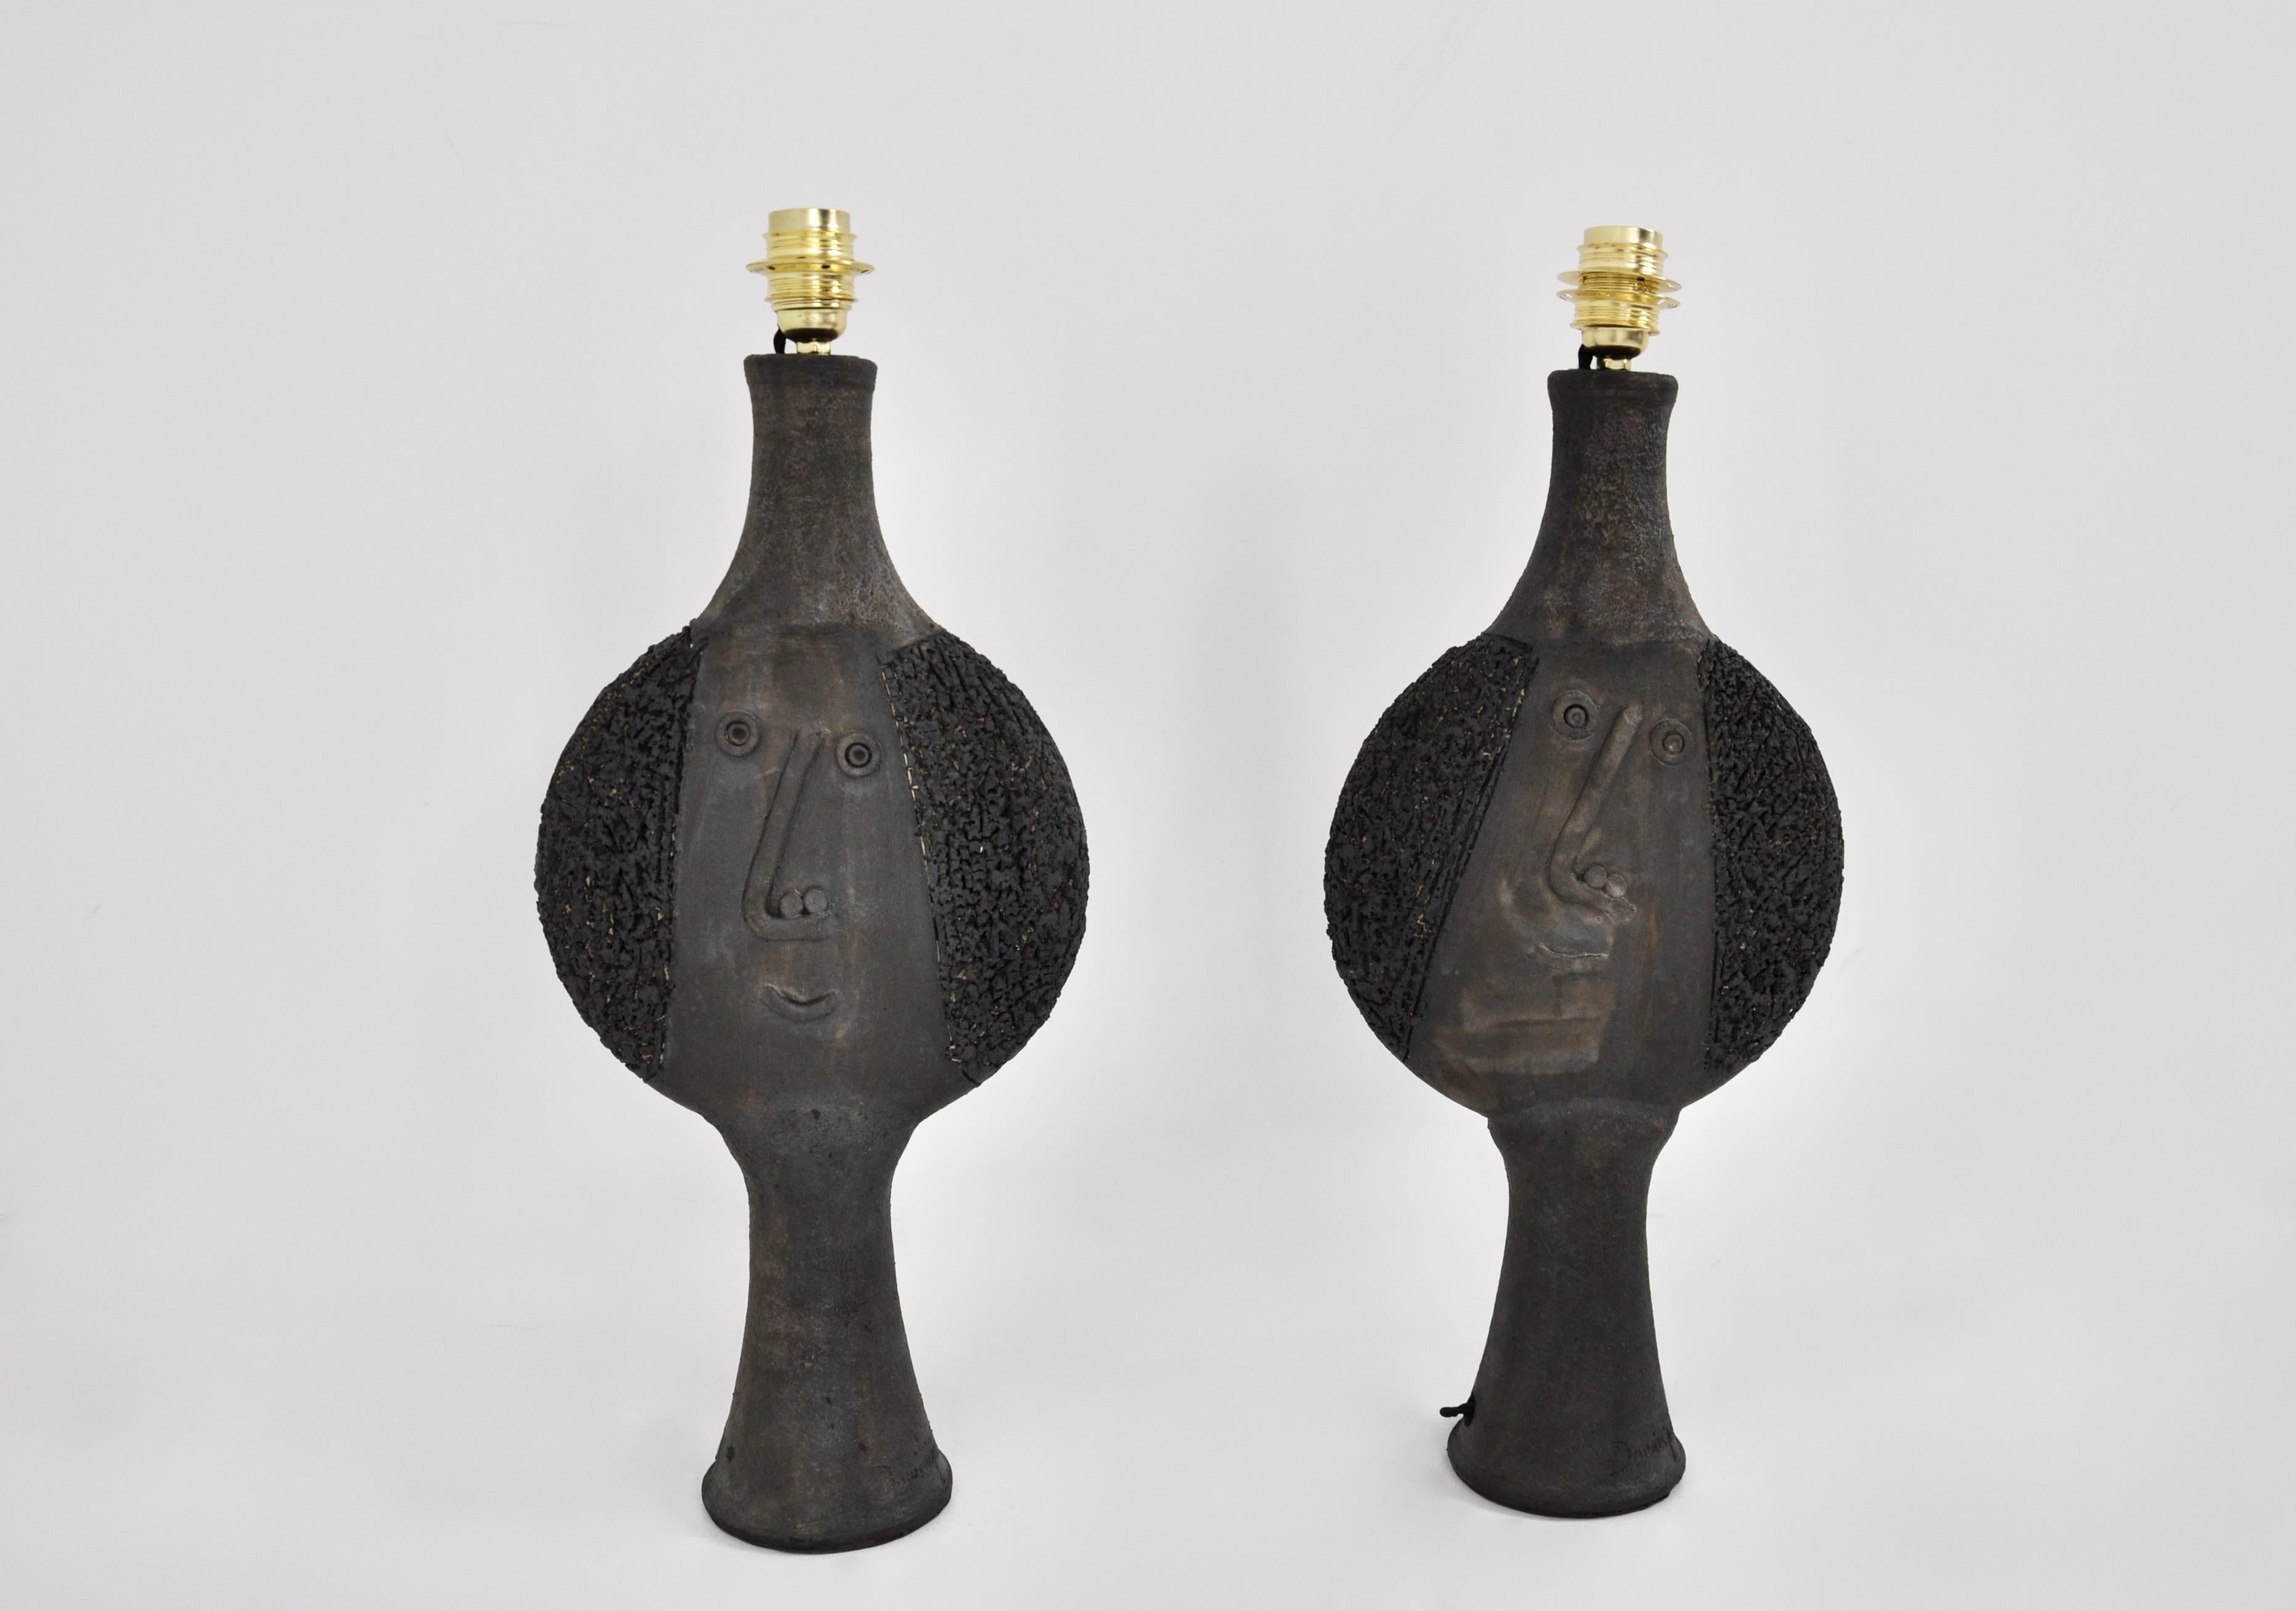 Pair of ceramic lamps by Dominique Pouchain. Stamped Dominique Pouchain (see picture).